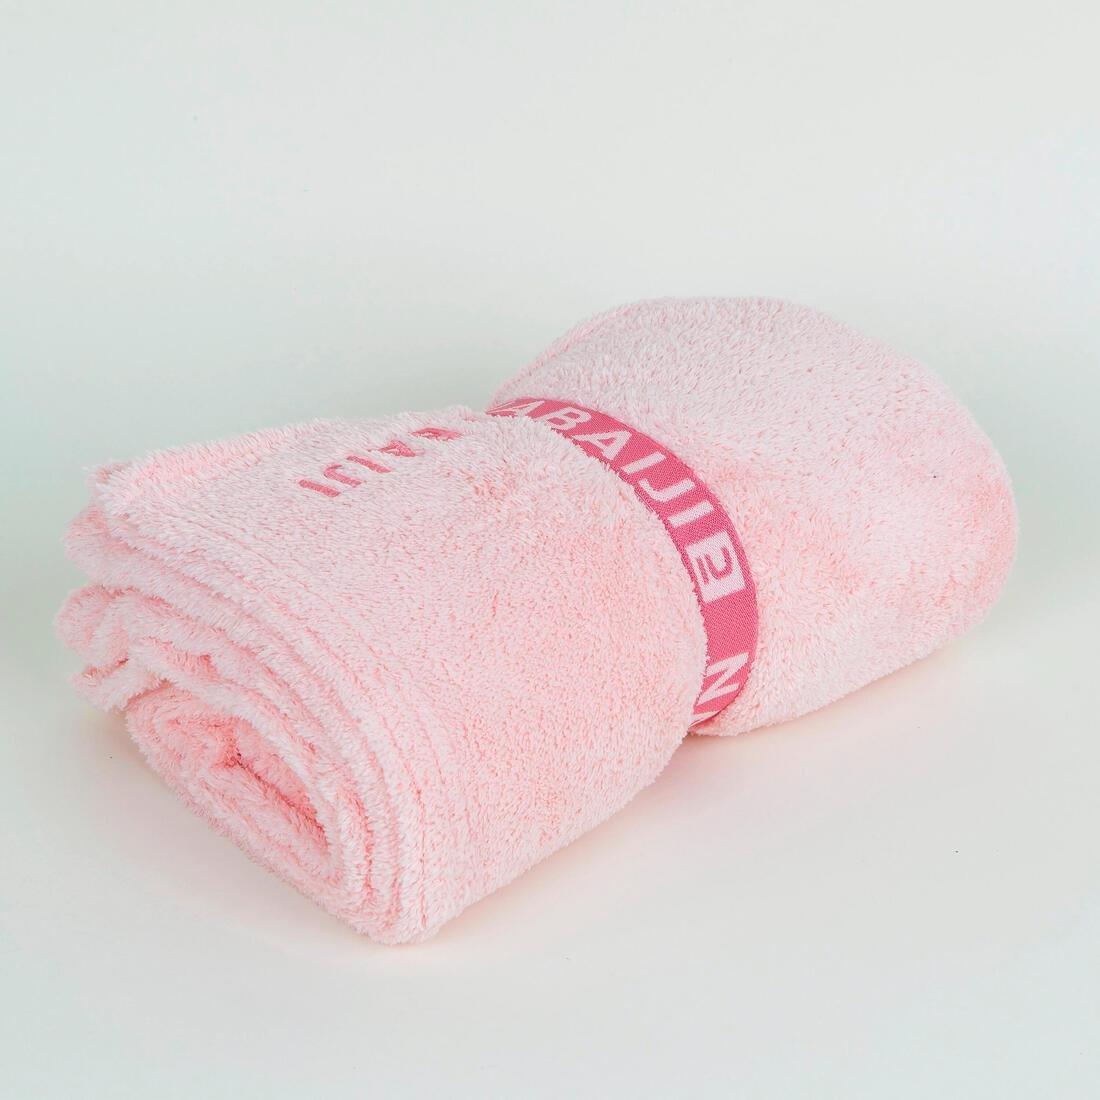 NABAIJI - Swimming Ultra-Soft Microfibre Towel, Green